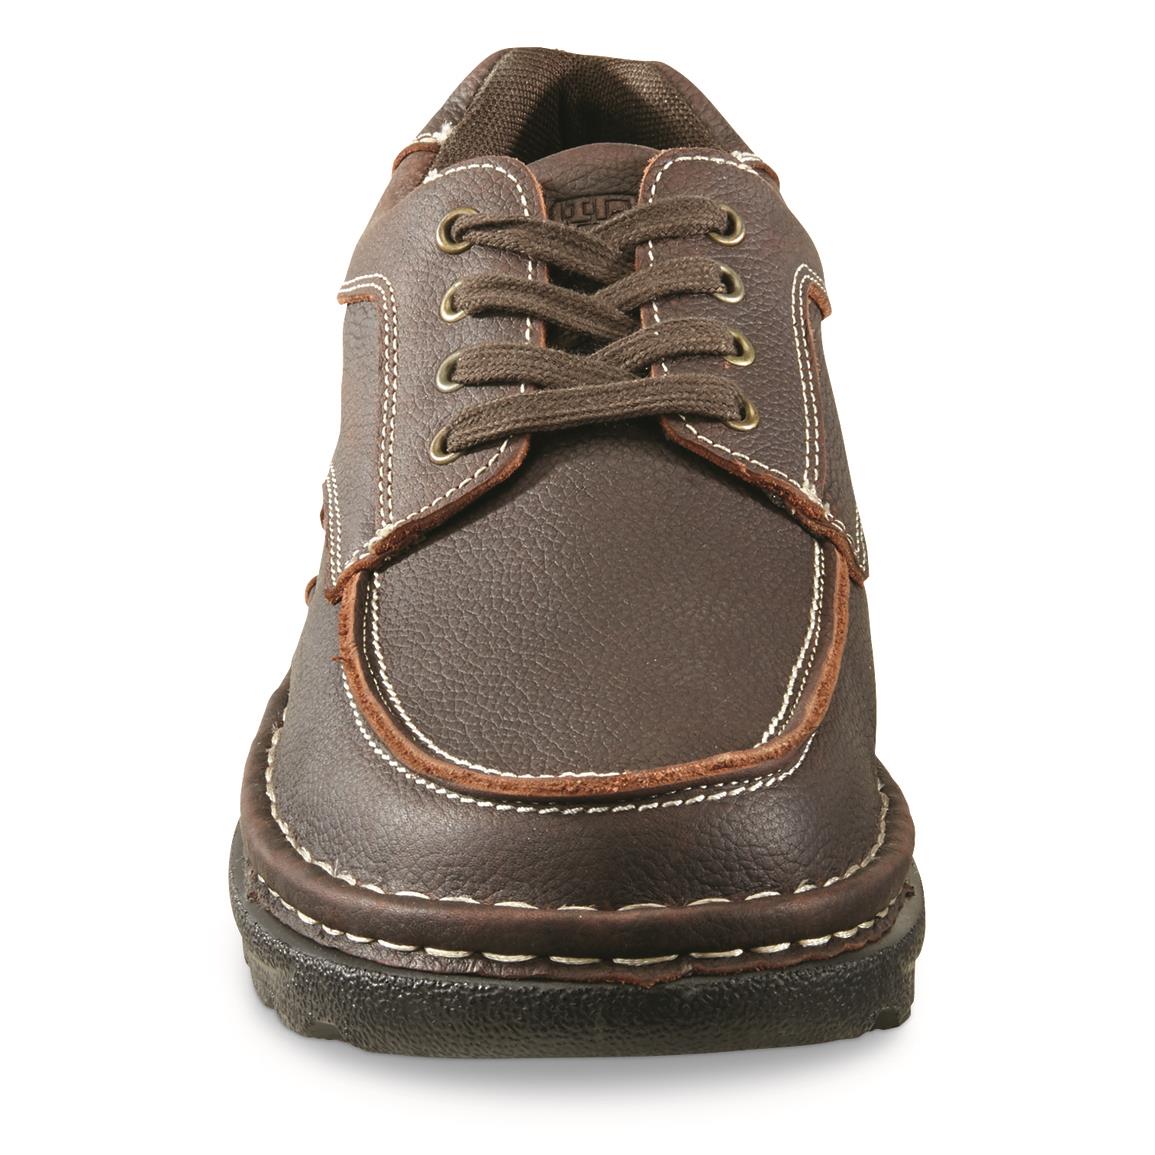 Irish Setter Men's Soft Paw Waterproof Oxford Shoes - 680258, Casual ...